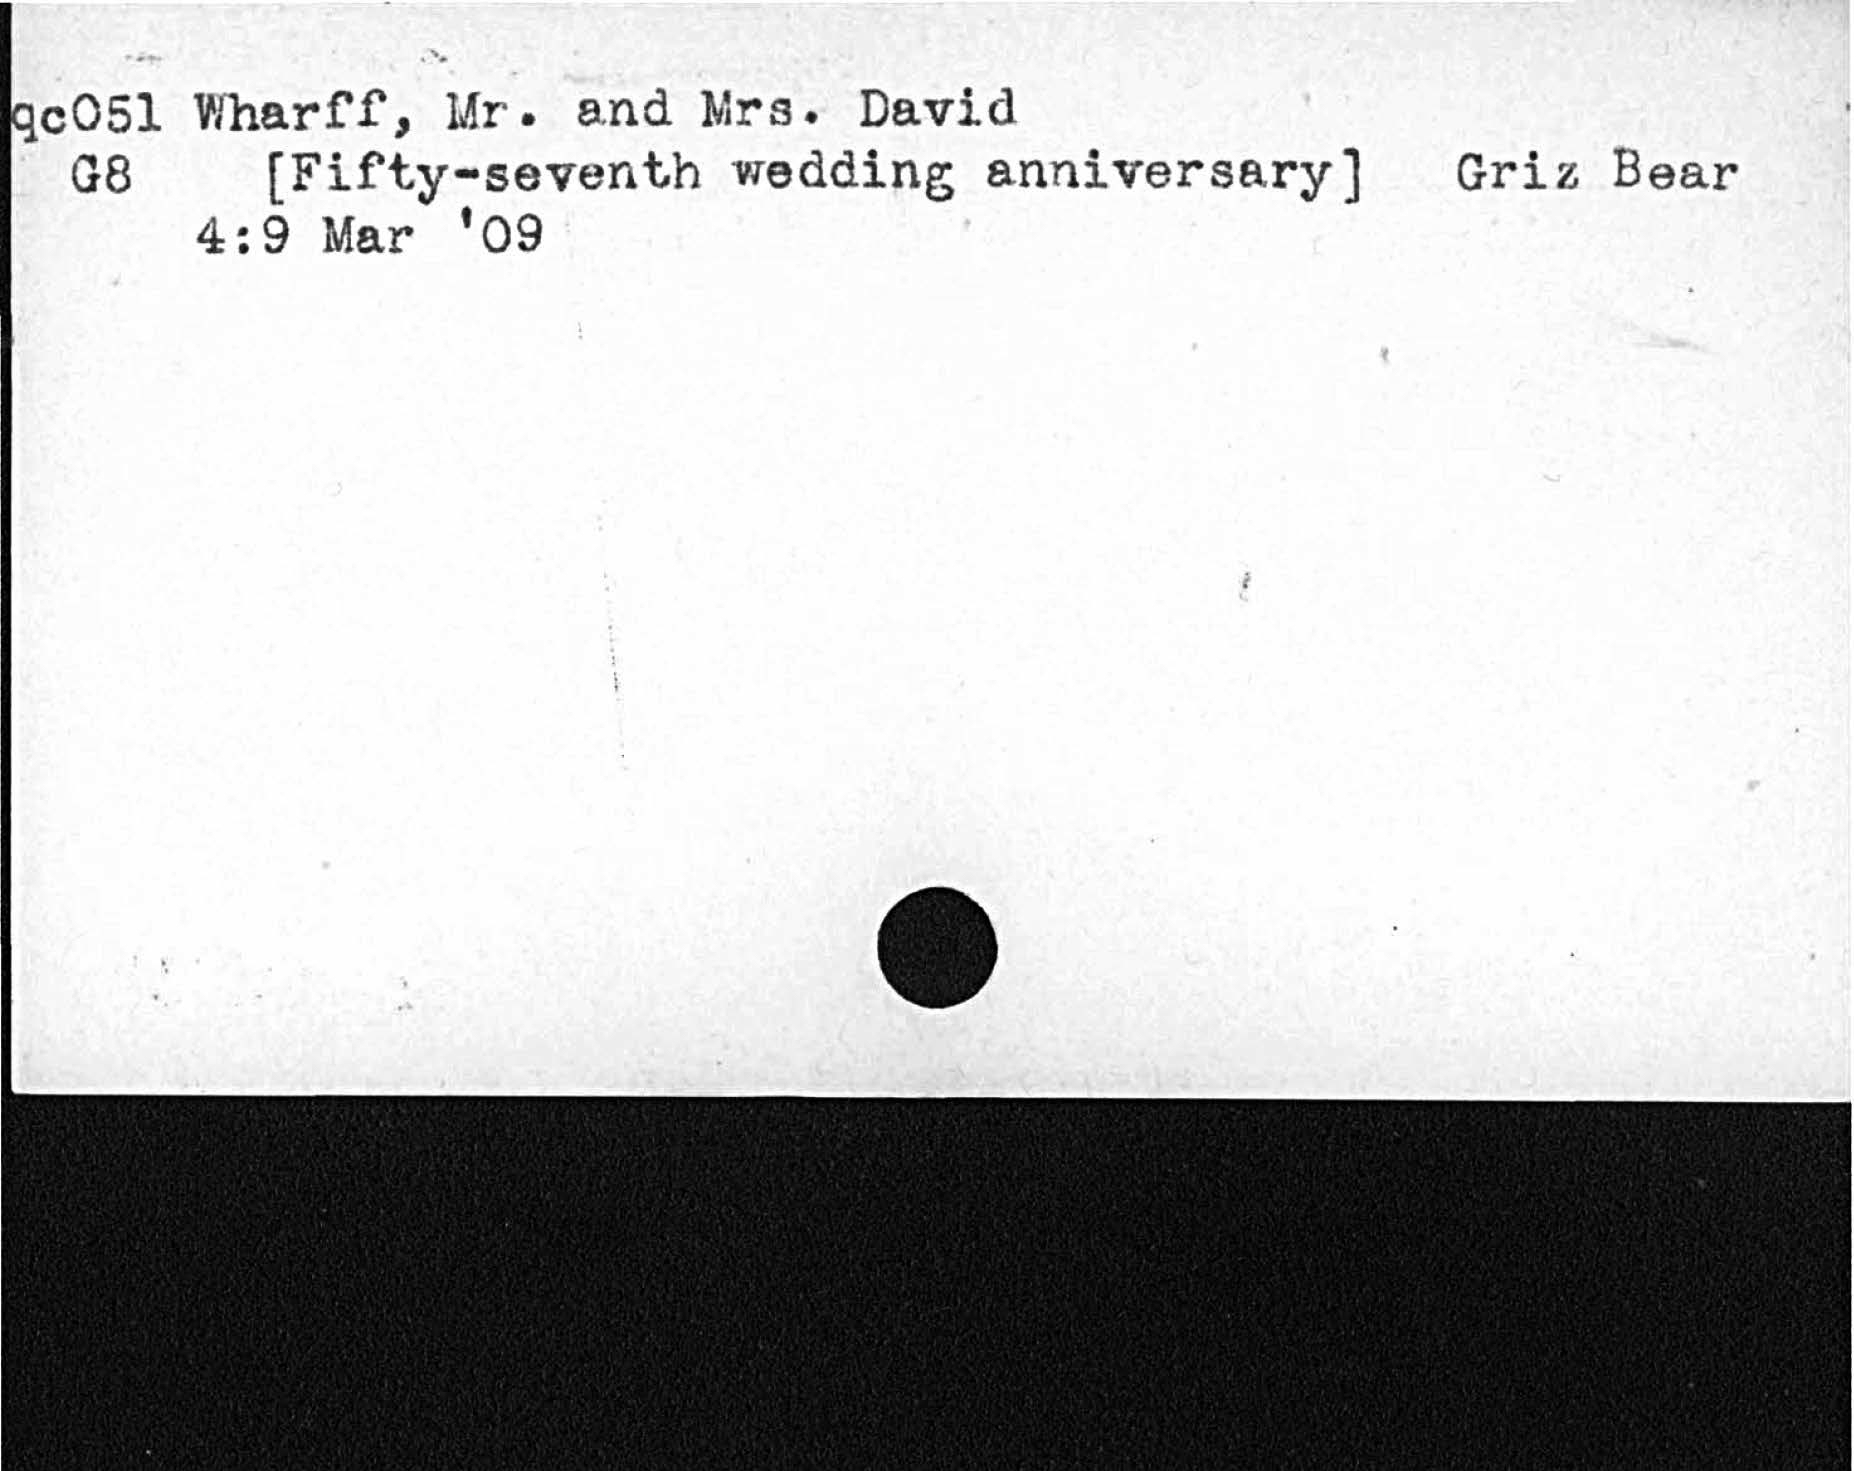 Wharff Mr. and Mrs. David[Fifty- seventh wedding anniversary] Griz Bear4:  9 Mar 09   c051  G8